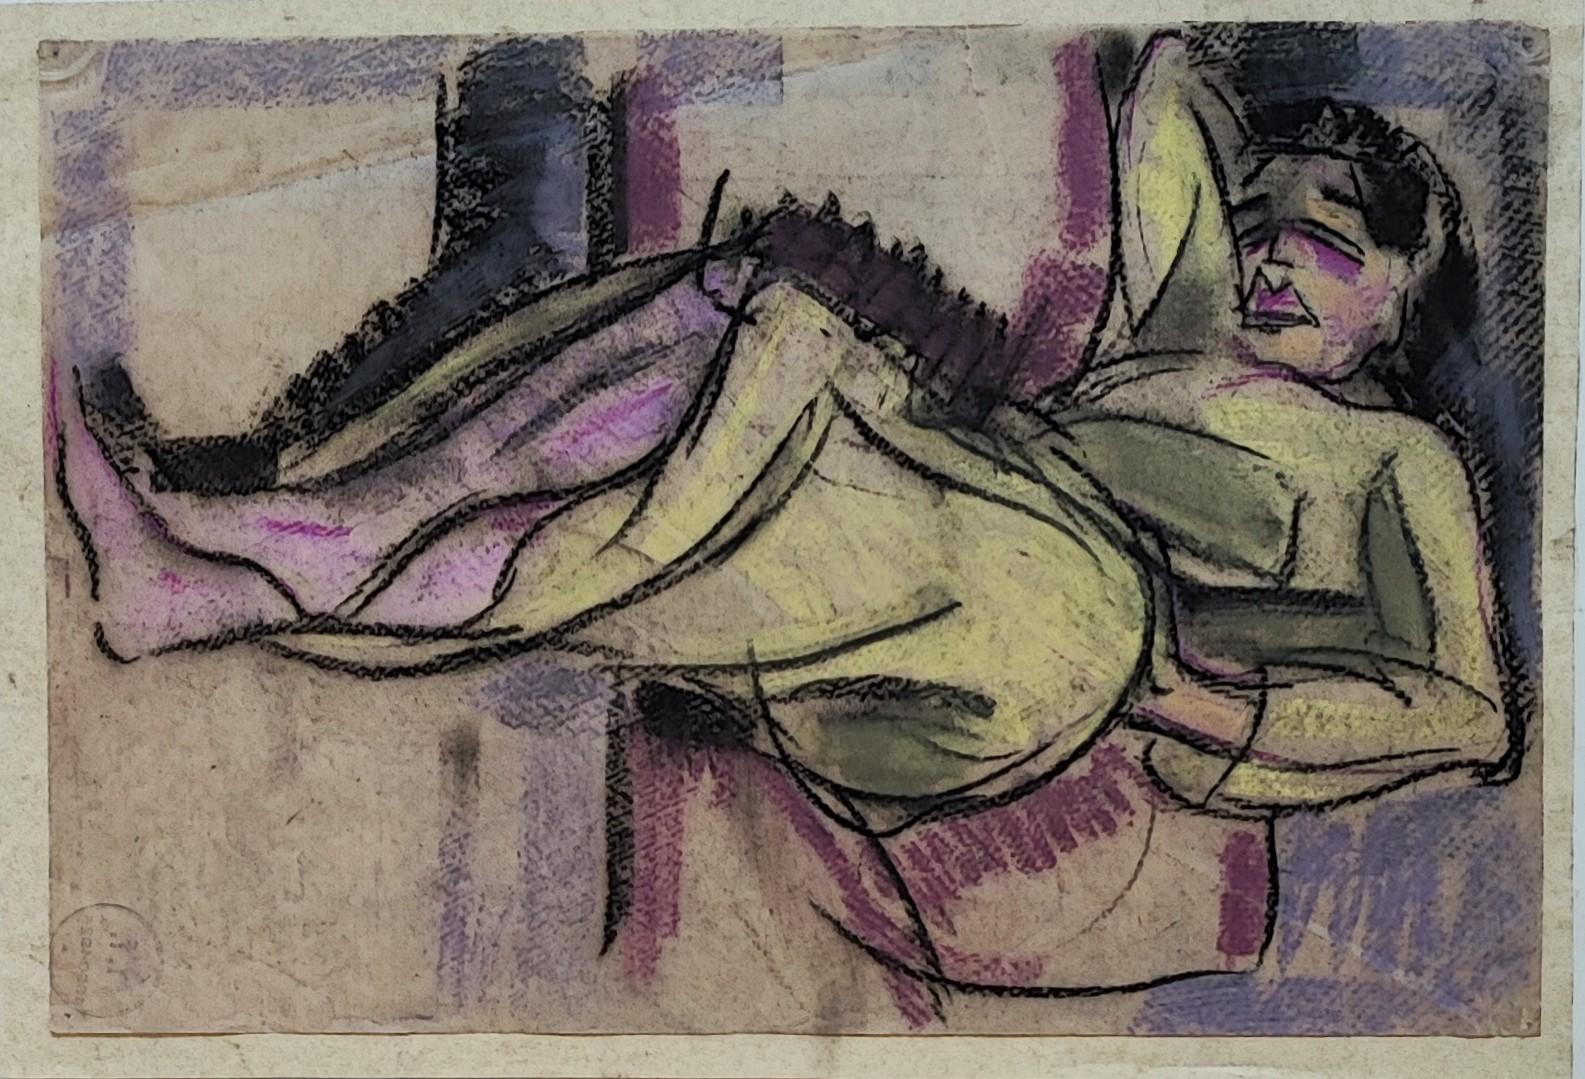 Young woman lying down